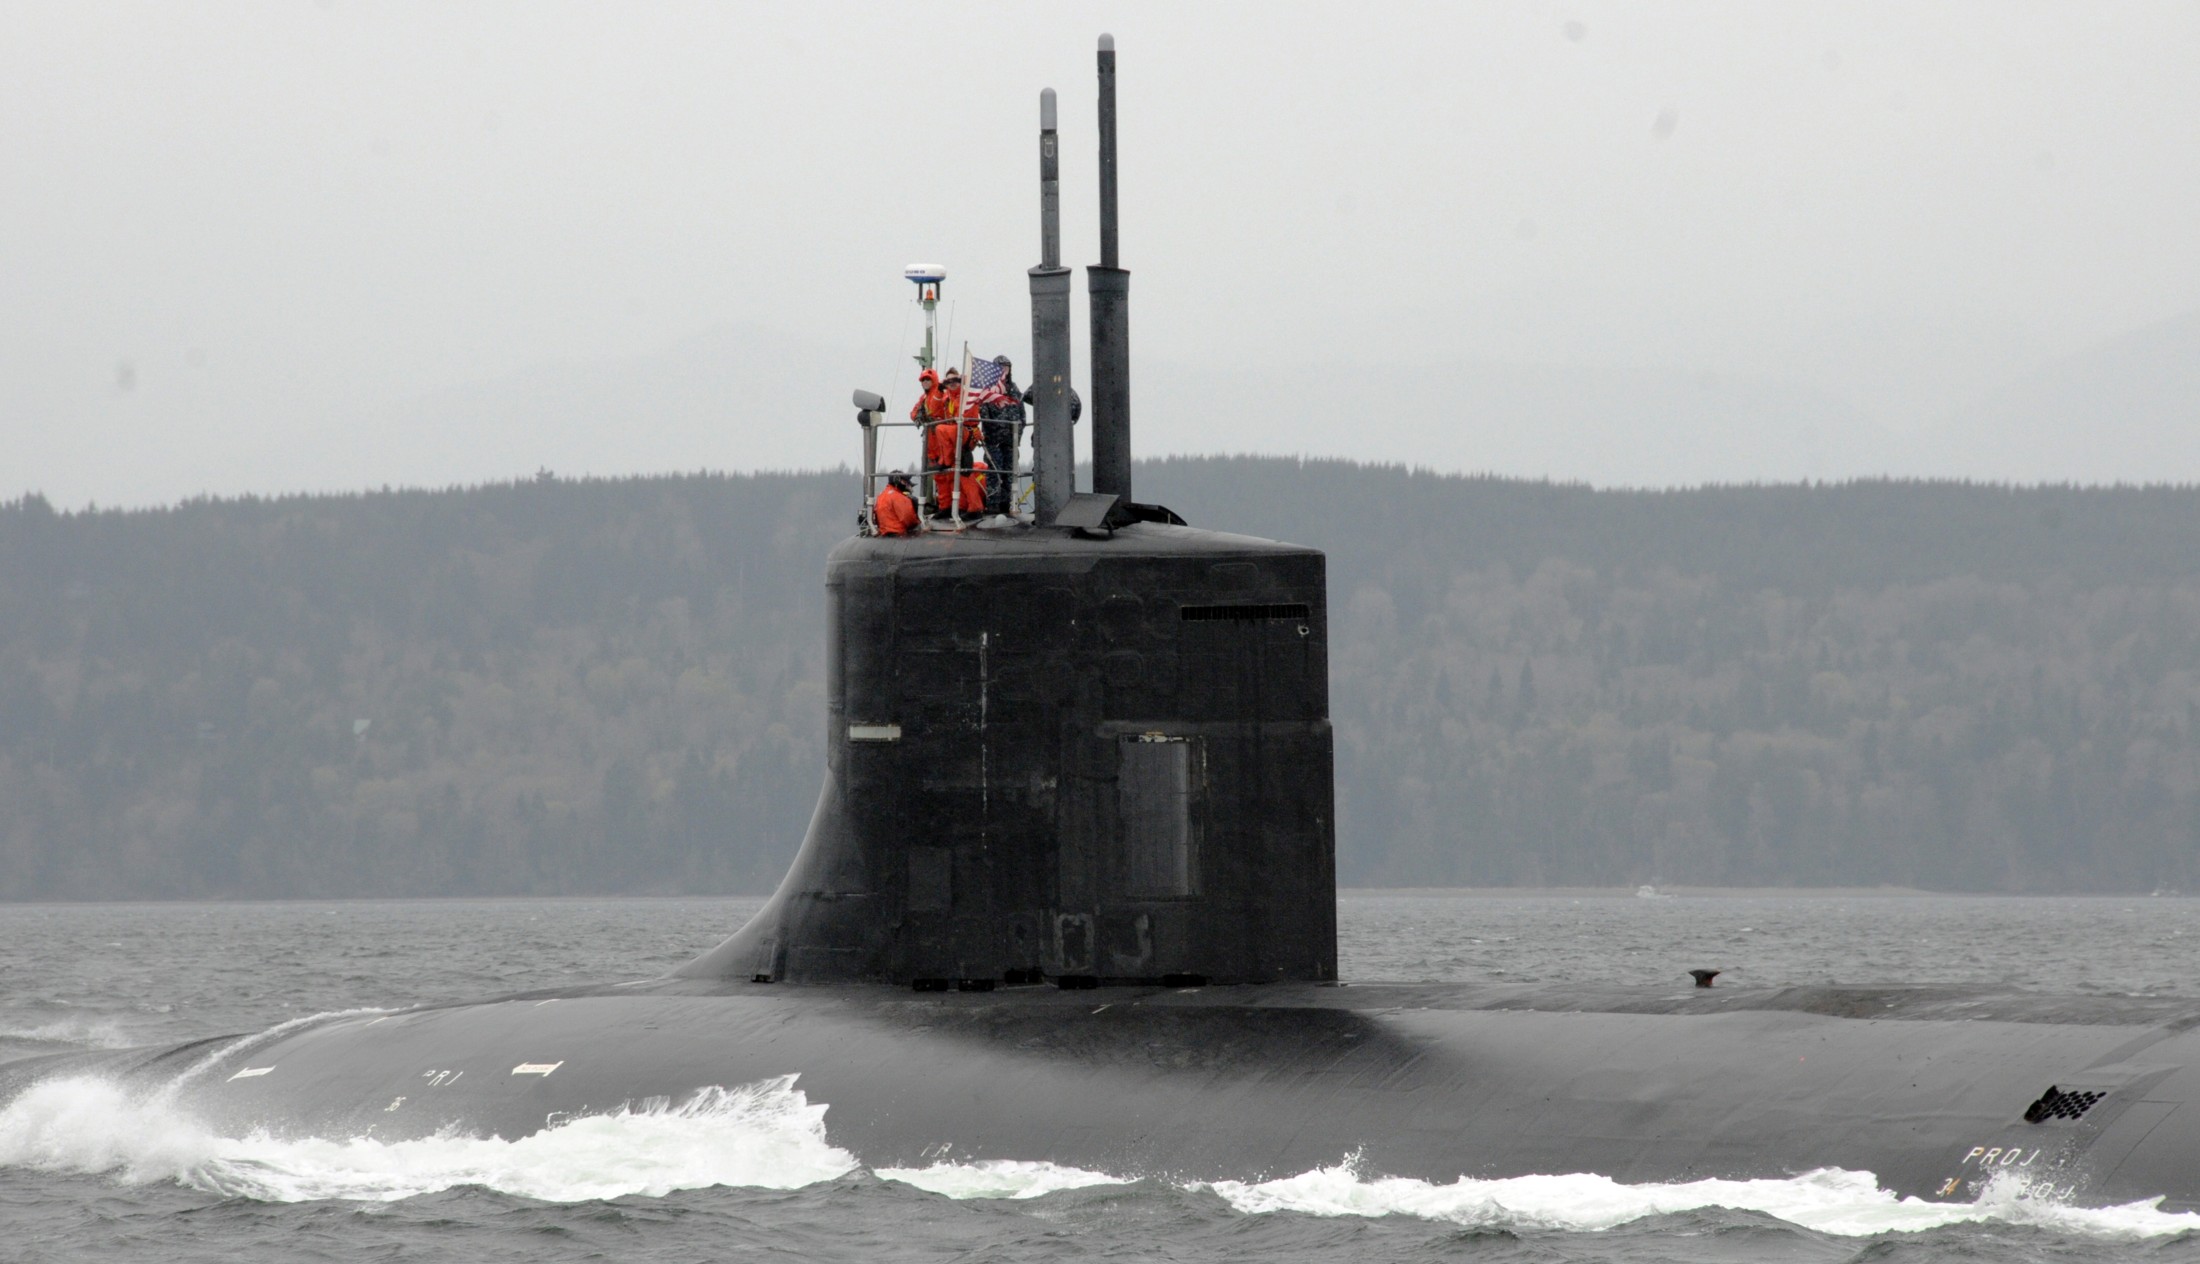 ssn-23 uss jimmy carter seawolf class attack submarine us navy returning naval base kitsap bremerton washington 29